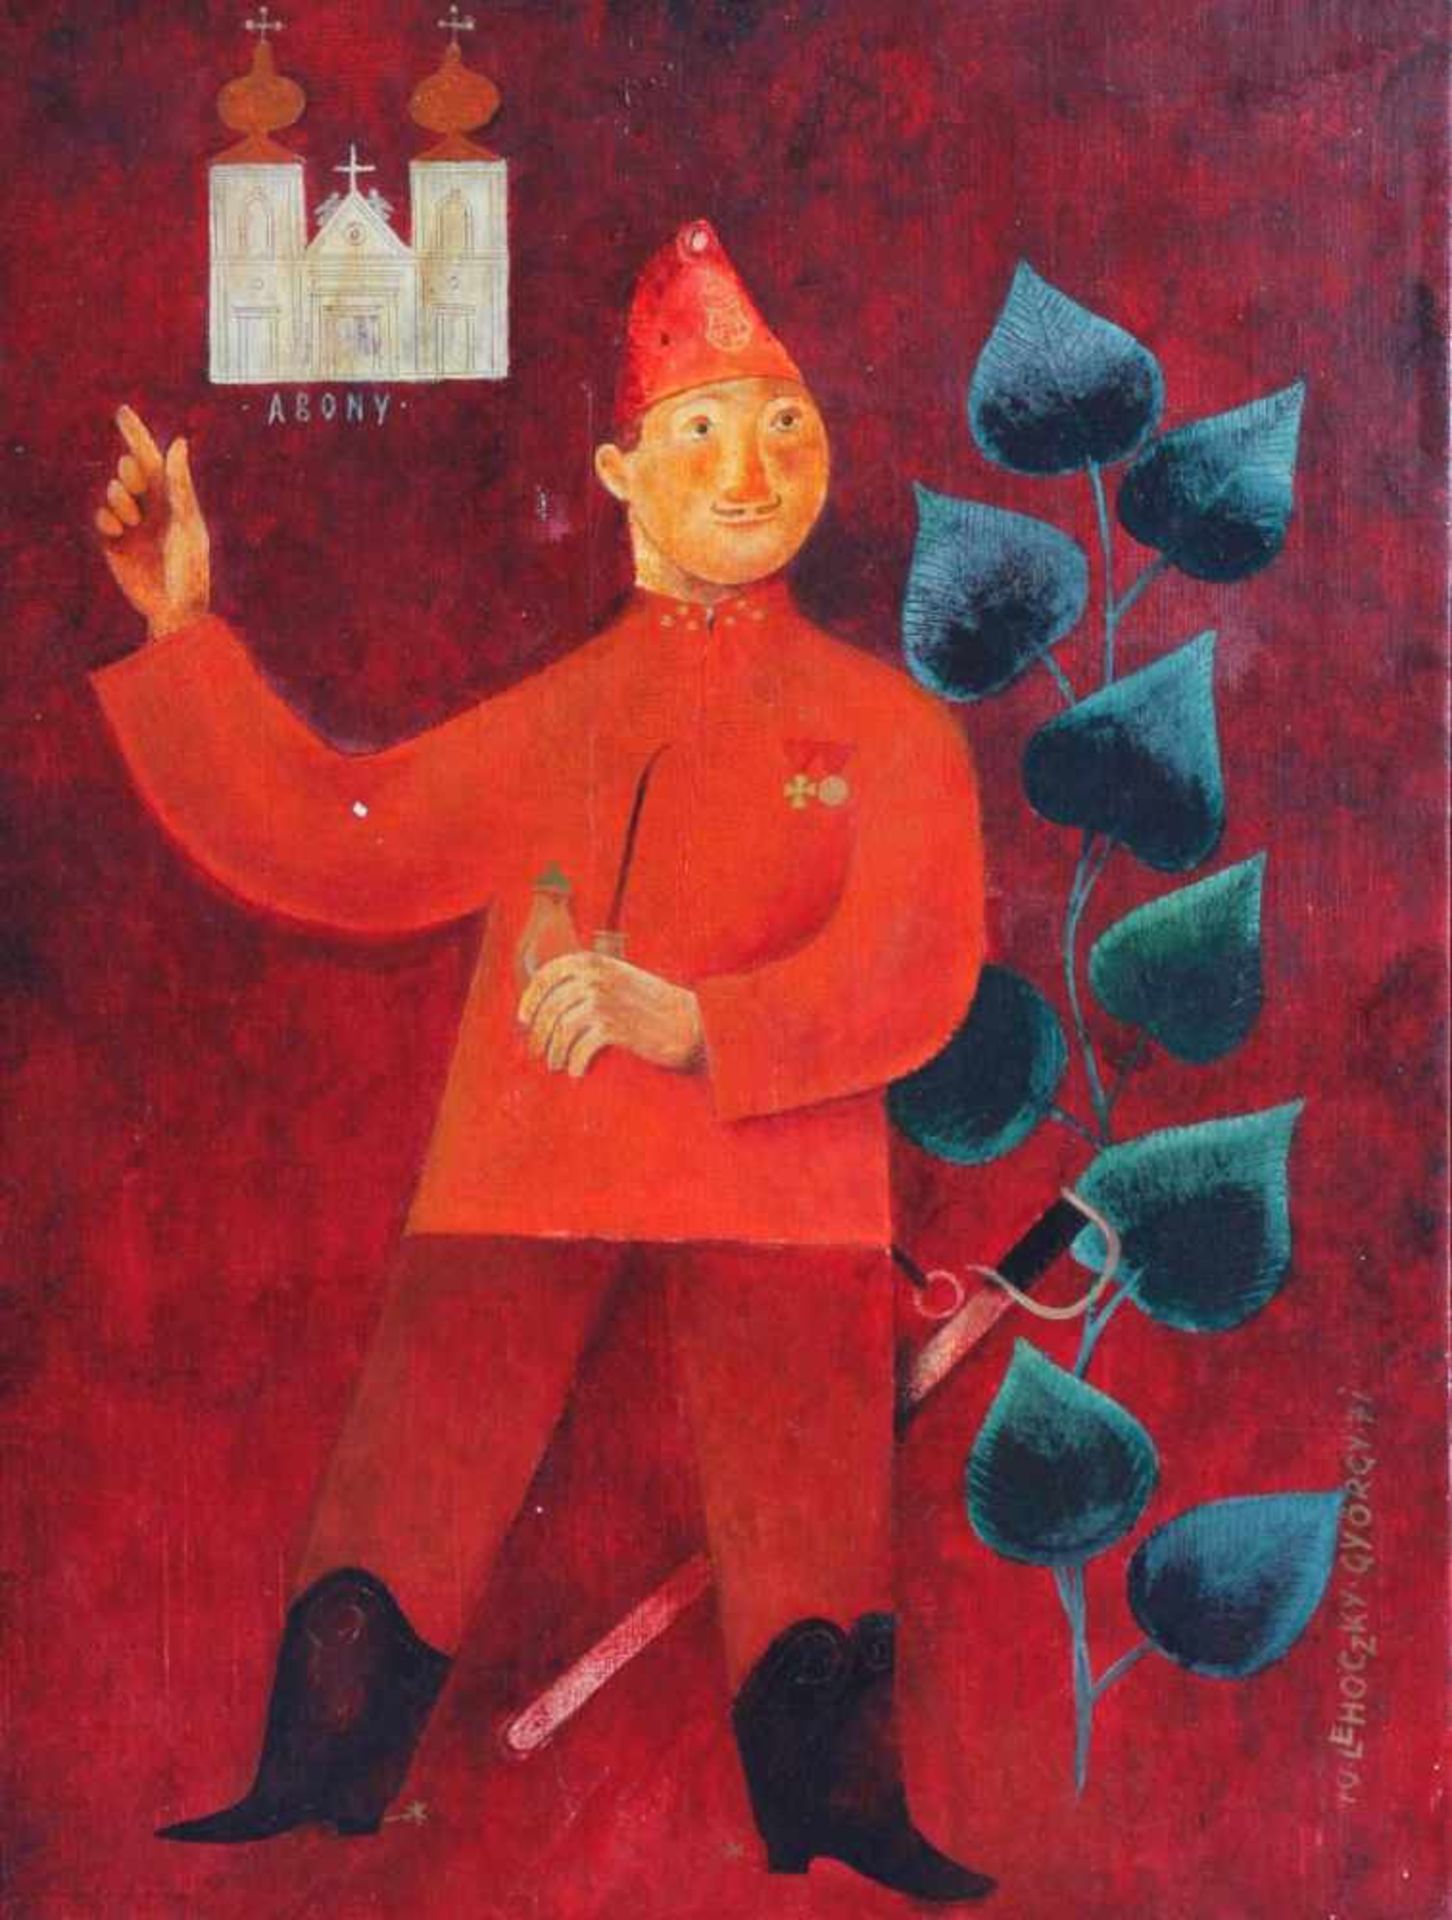 György LEHOCZKY (1901-1979), Abony< - Image 2 of 4